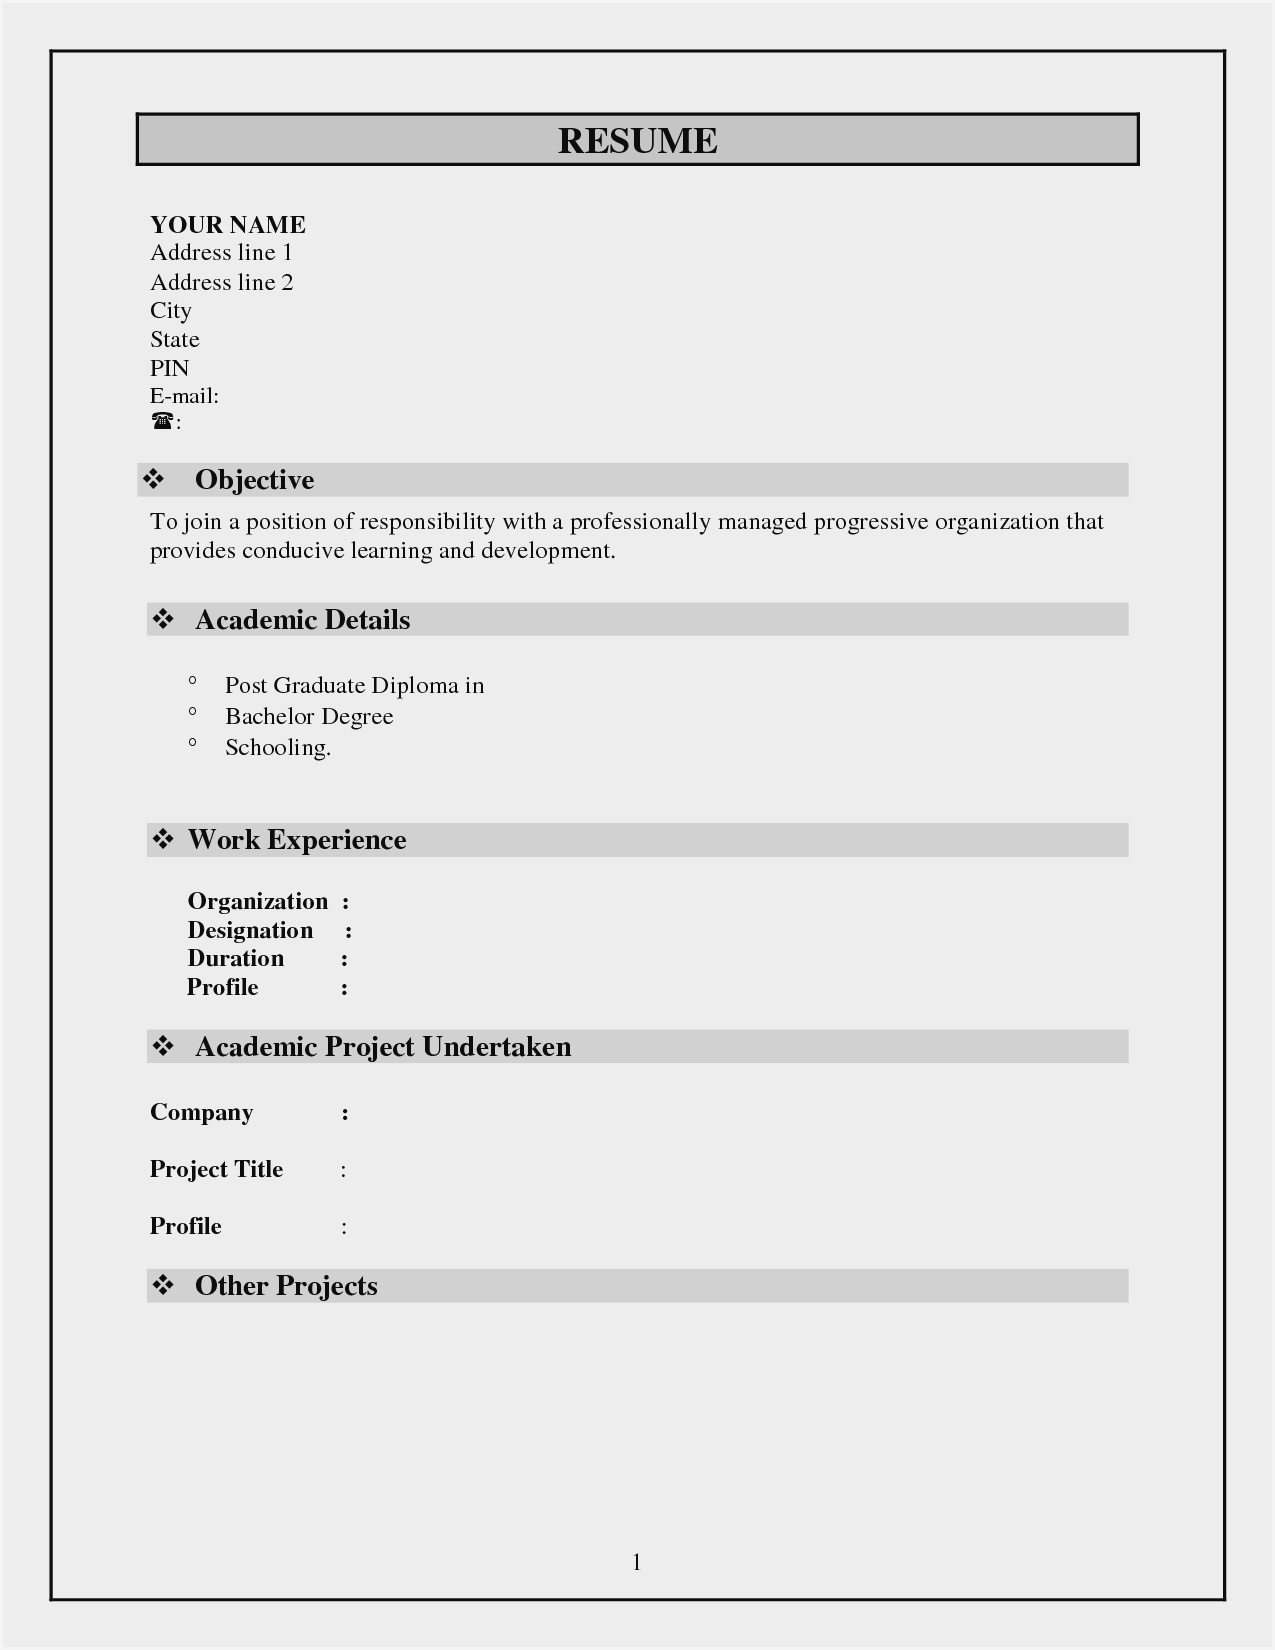 Download Blank Cv Format – Resume : Resume Sample #2196 Throughout Free Blank Cv Template Download